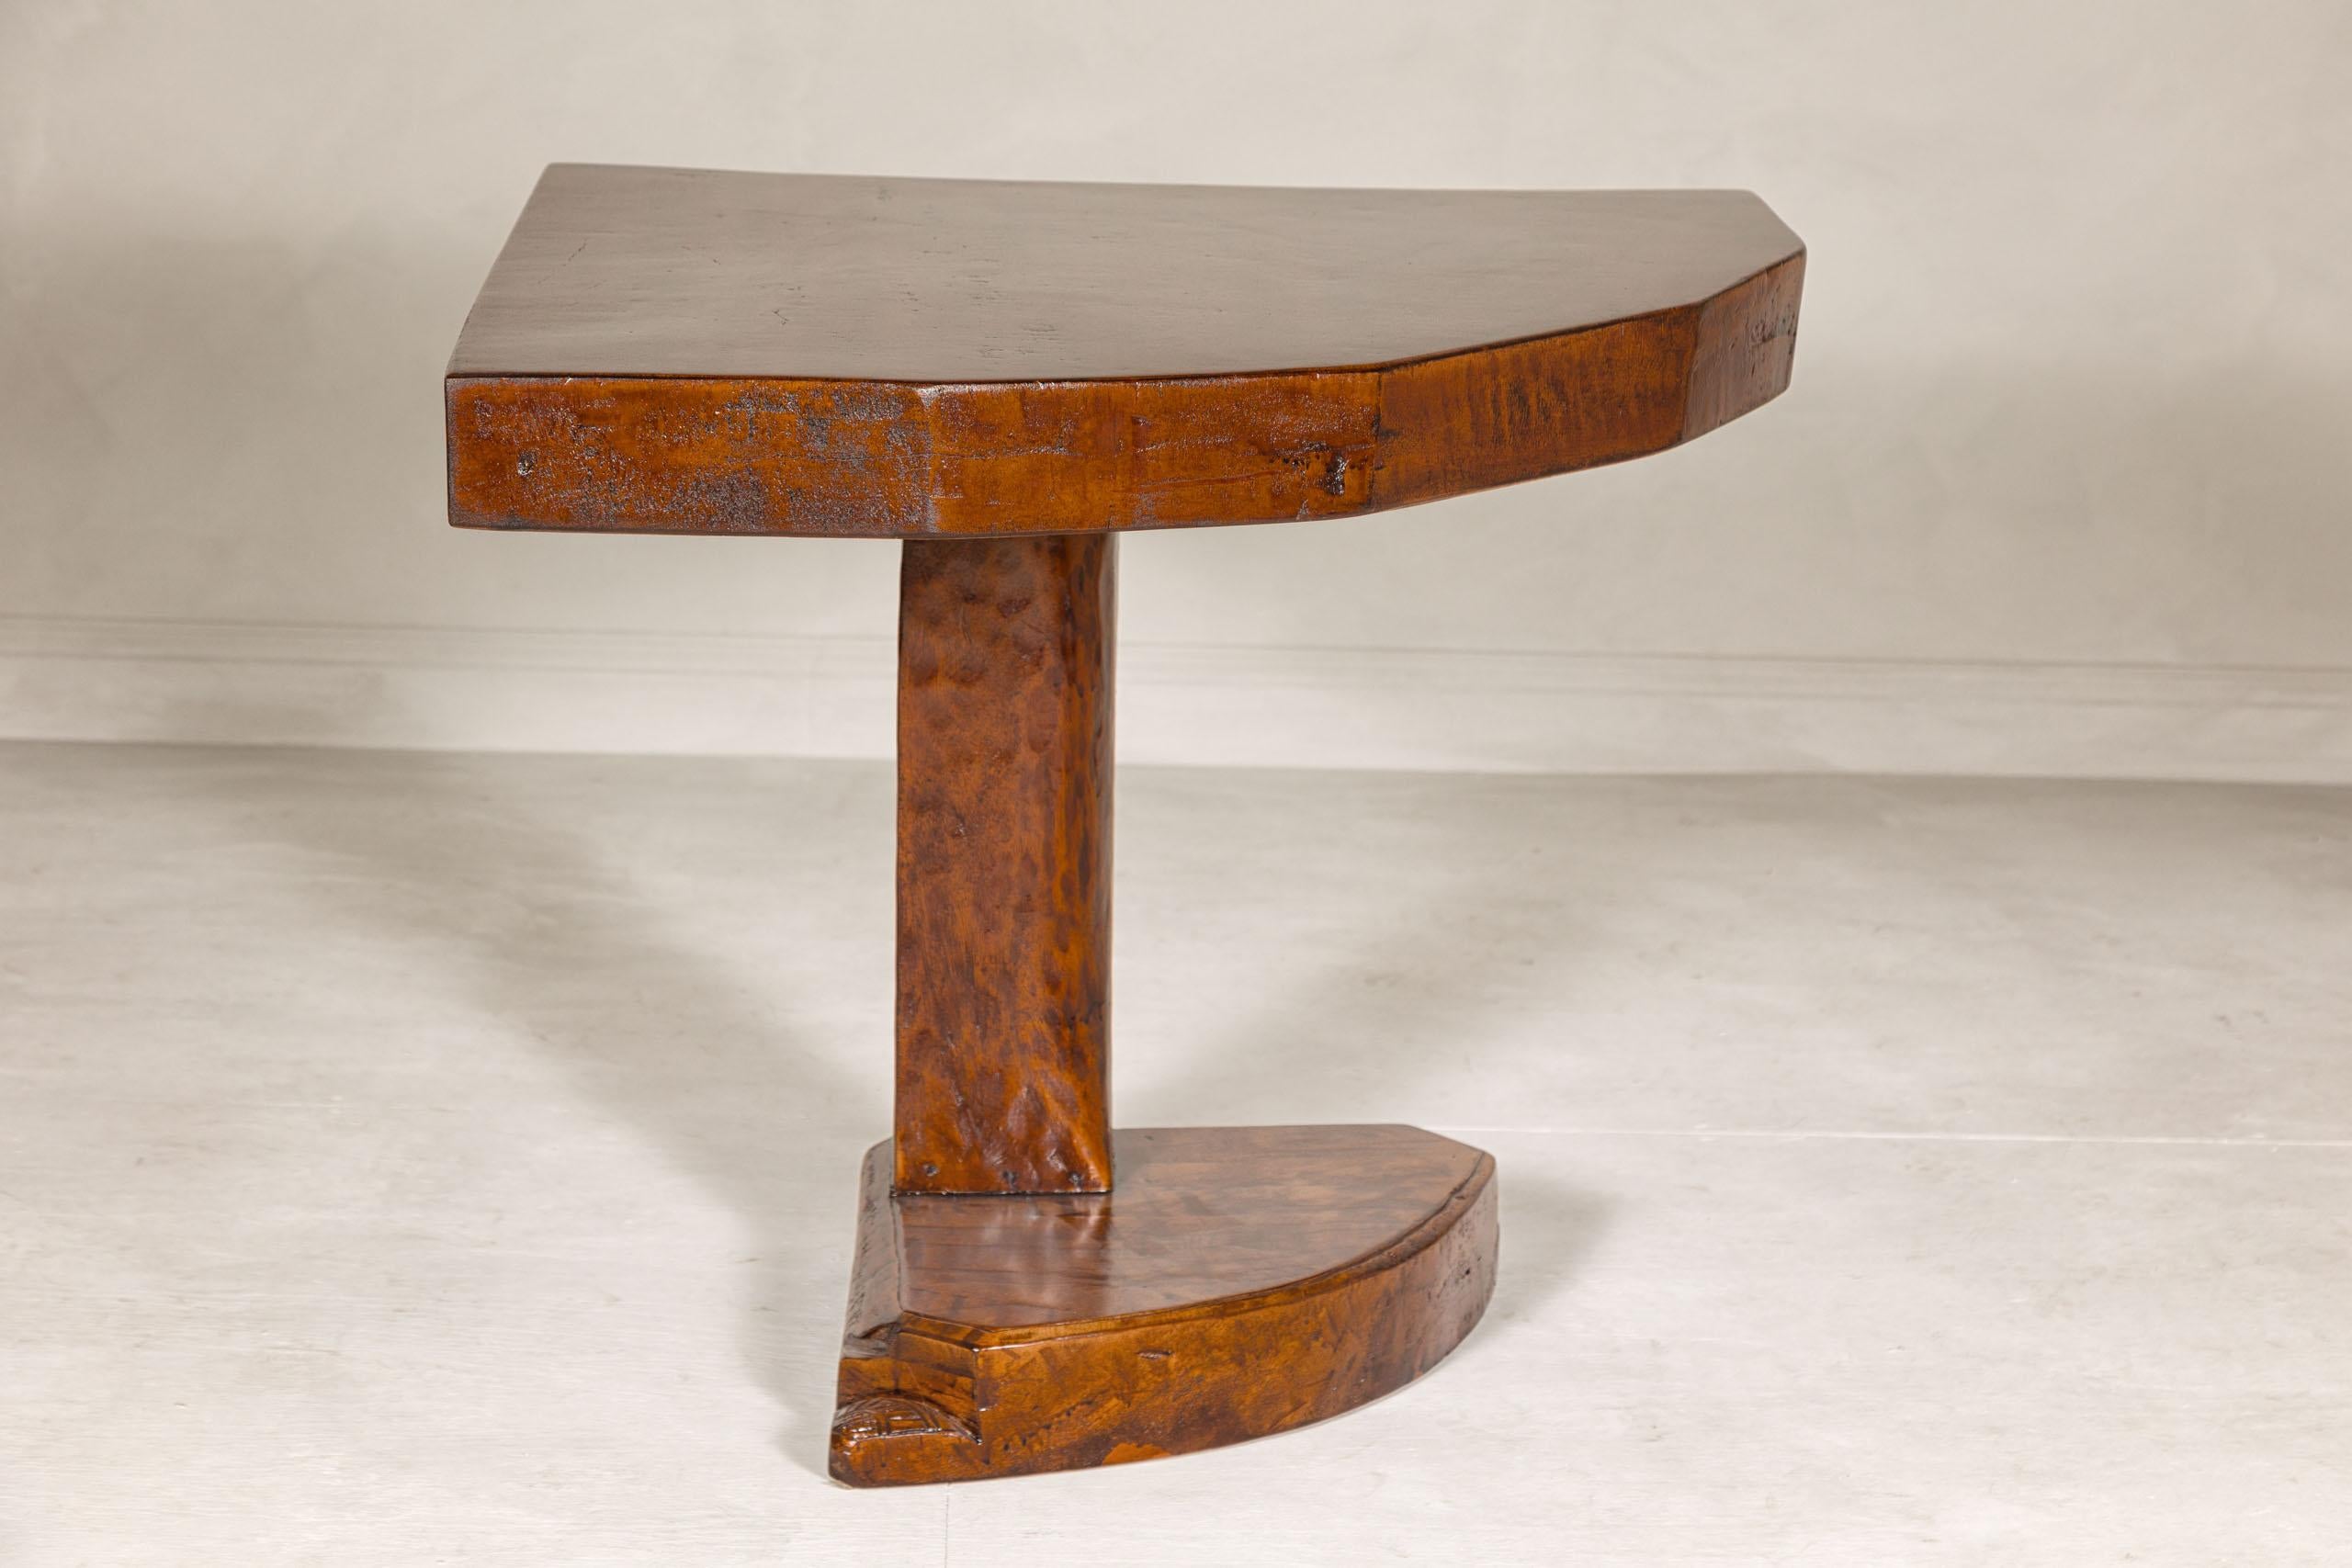 Rustic Vintage Corner Demilune Pedestal Table with Delicately Carved Base For Sale 4